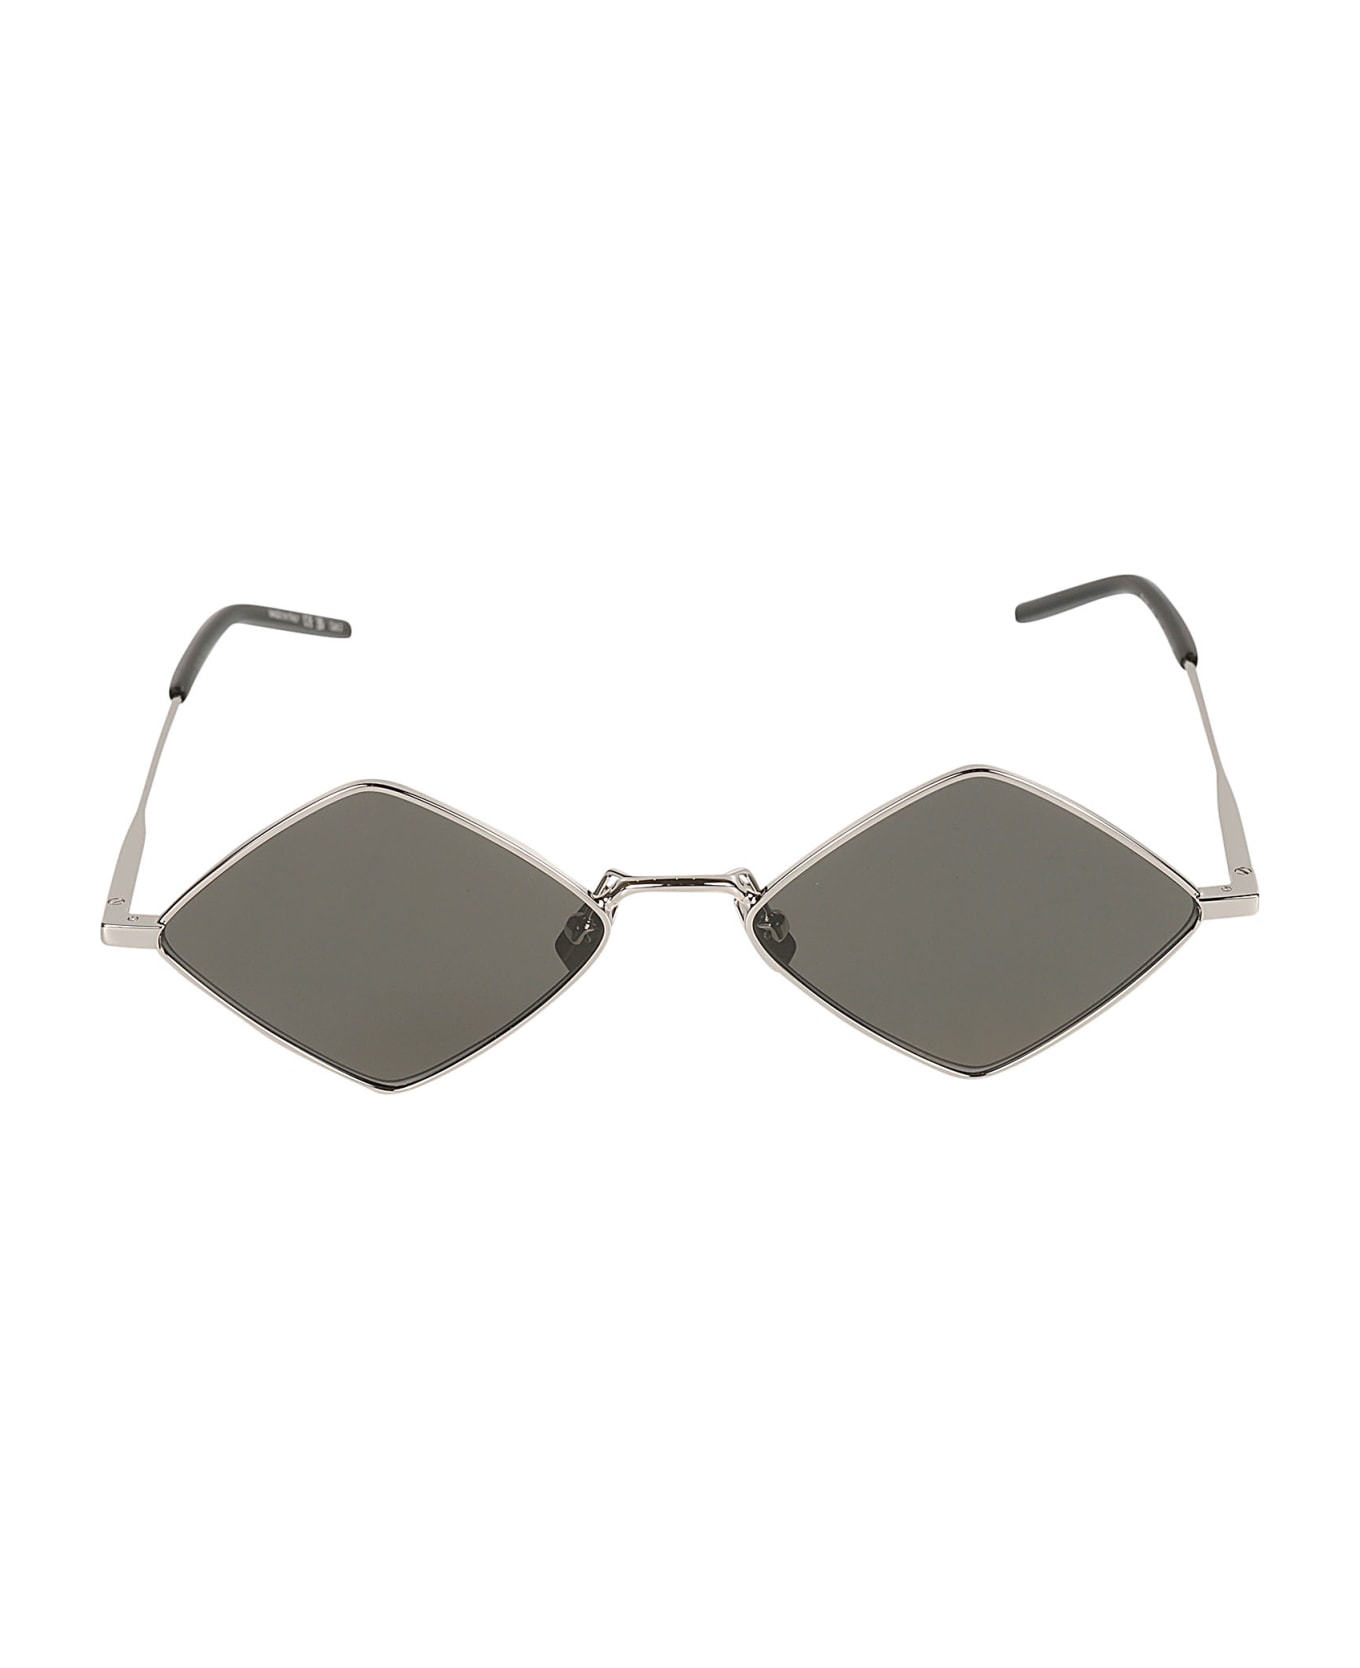 Saint Laurent Eyewear Sl 302 Lisa Sunglasses - Silver/Grey